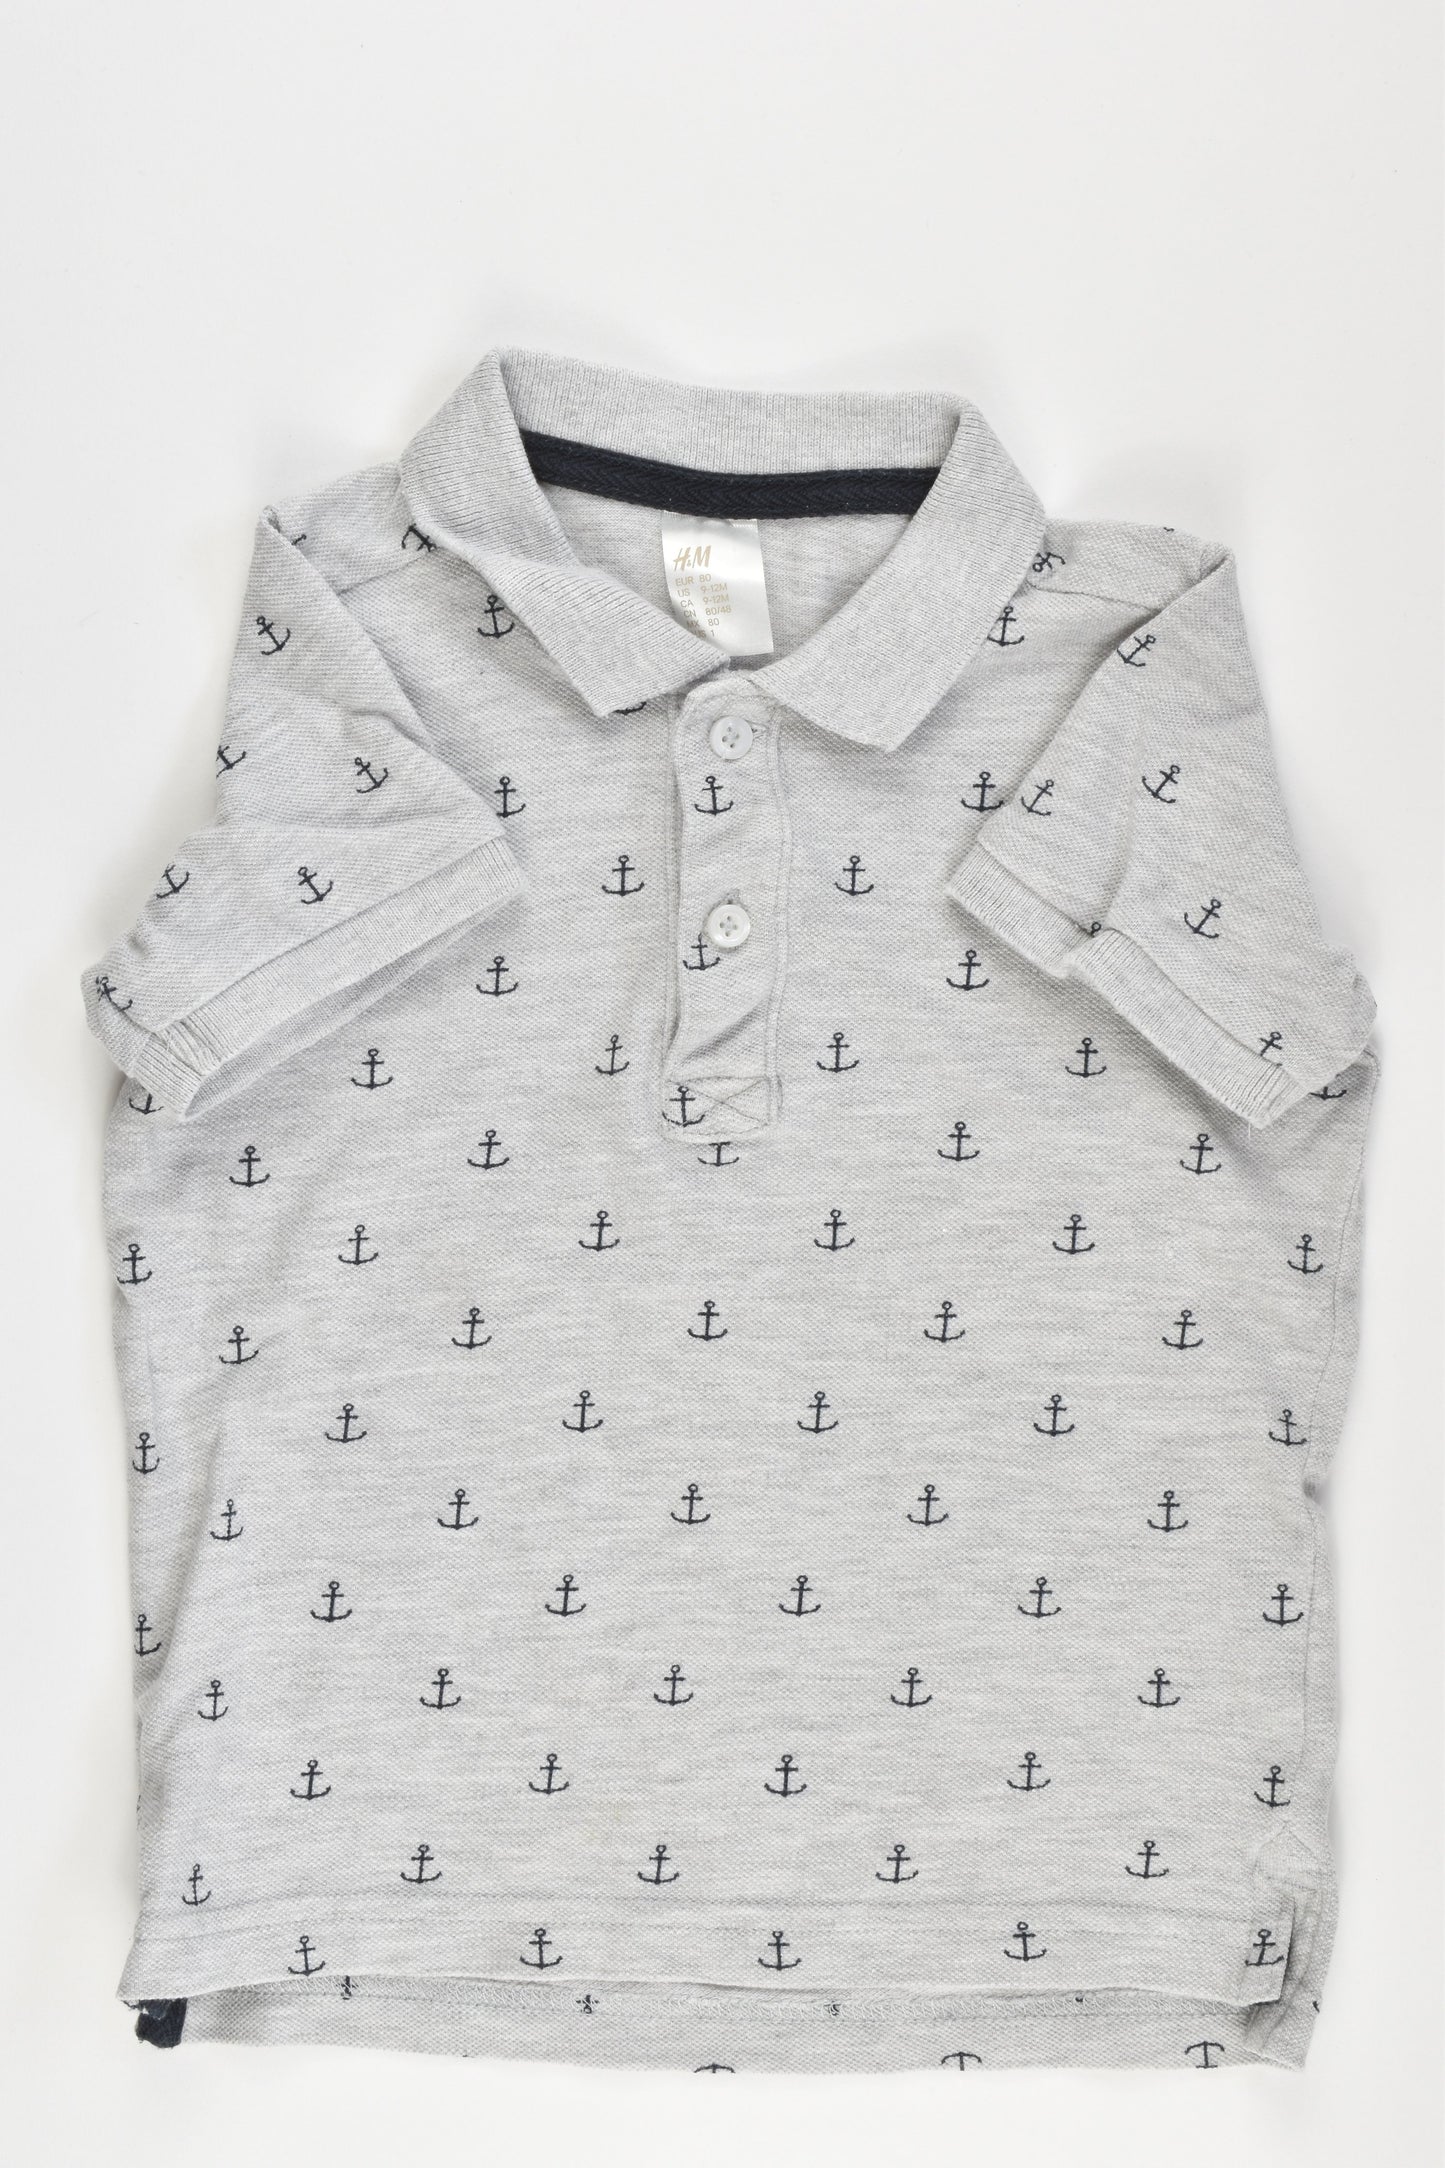 H&M Size 0-1 (80 cm, 9-12 months) T-shirt, collared